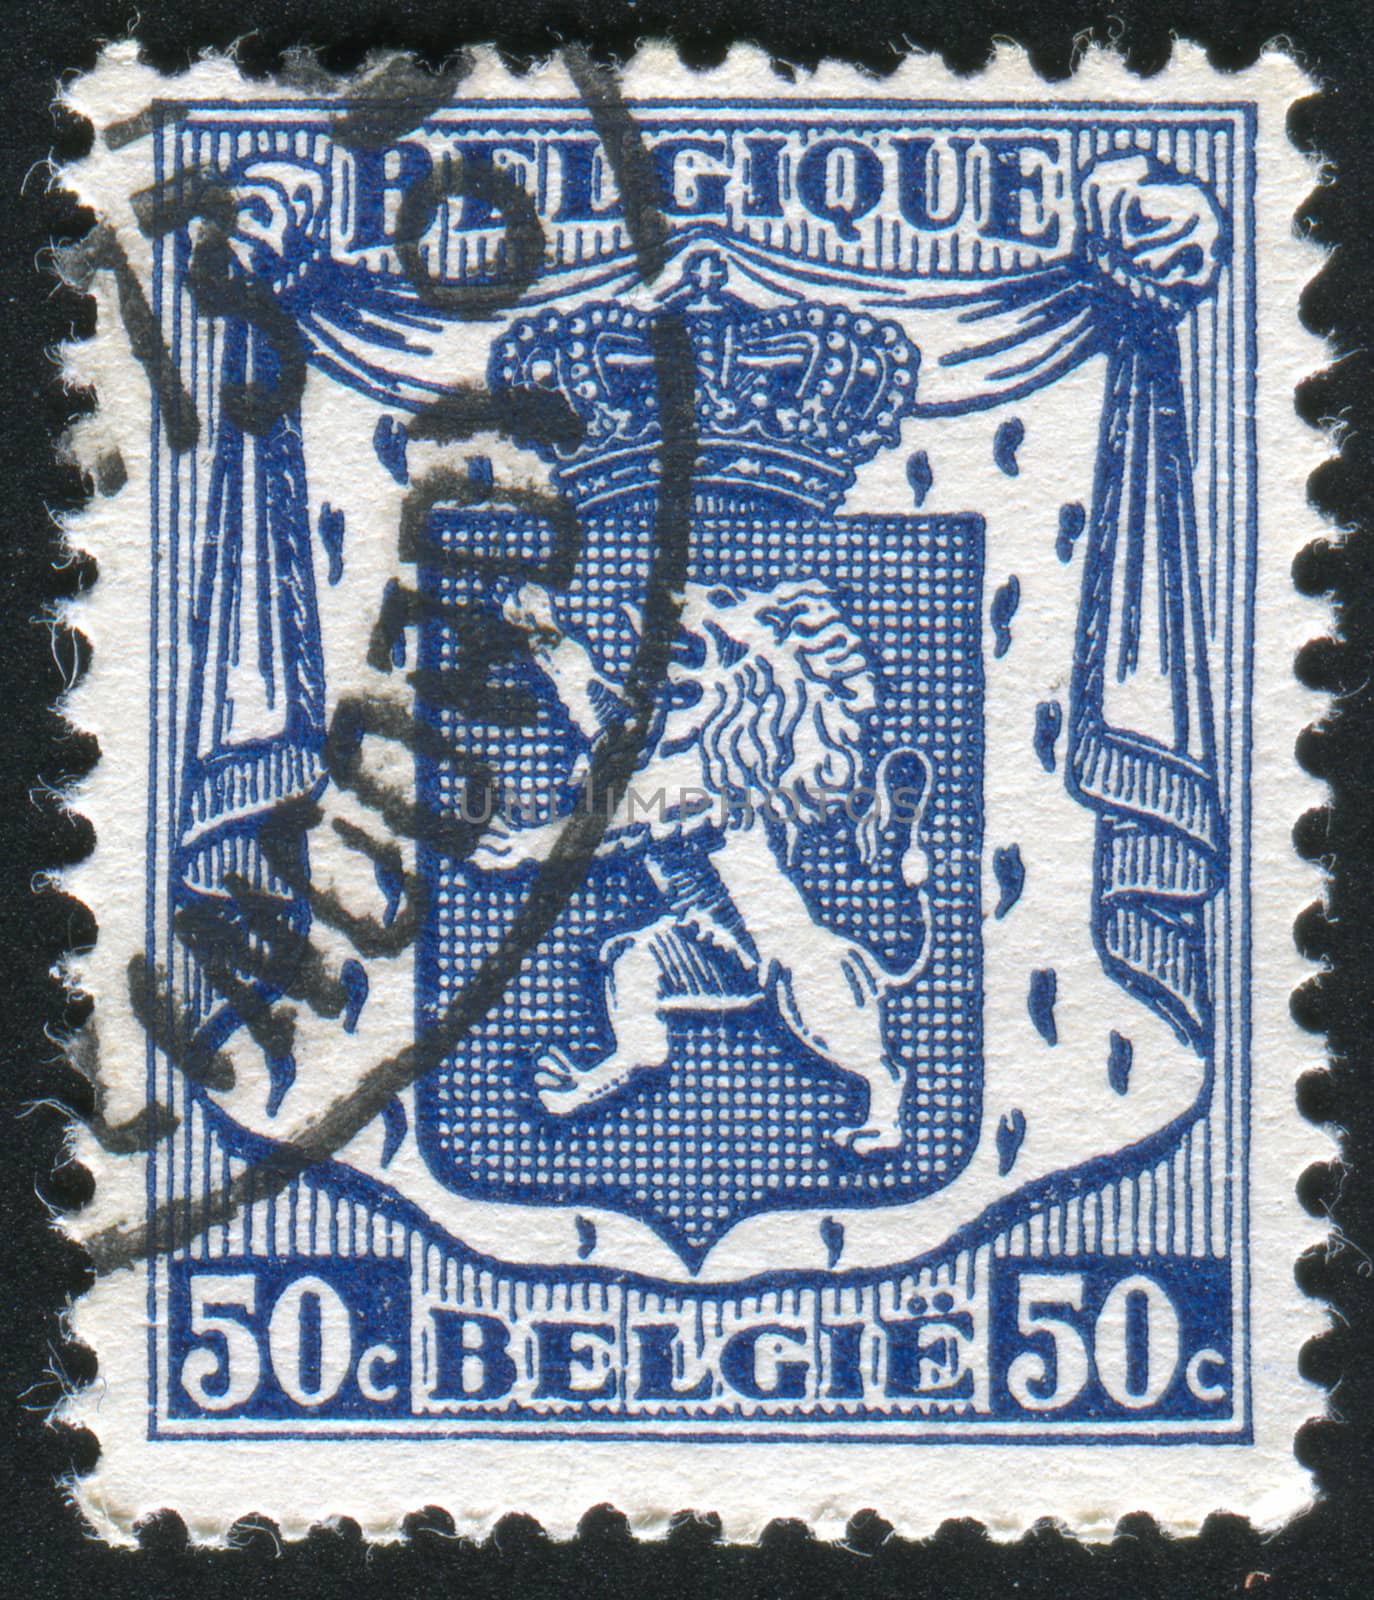 BELGIUM - CIRCA 1935: stamp printed by Belgium, shows Coat of Arms, circa 1935